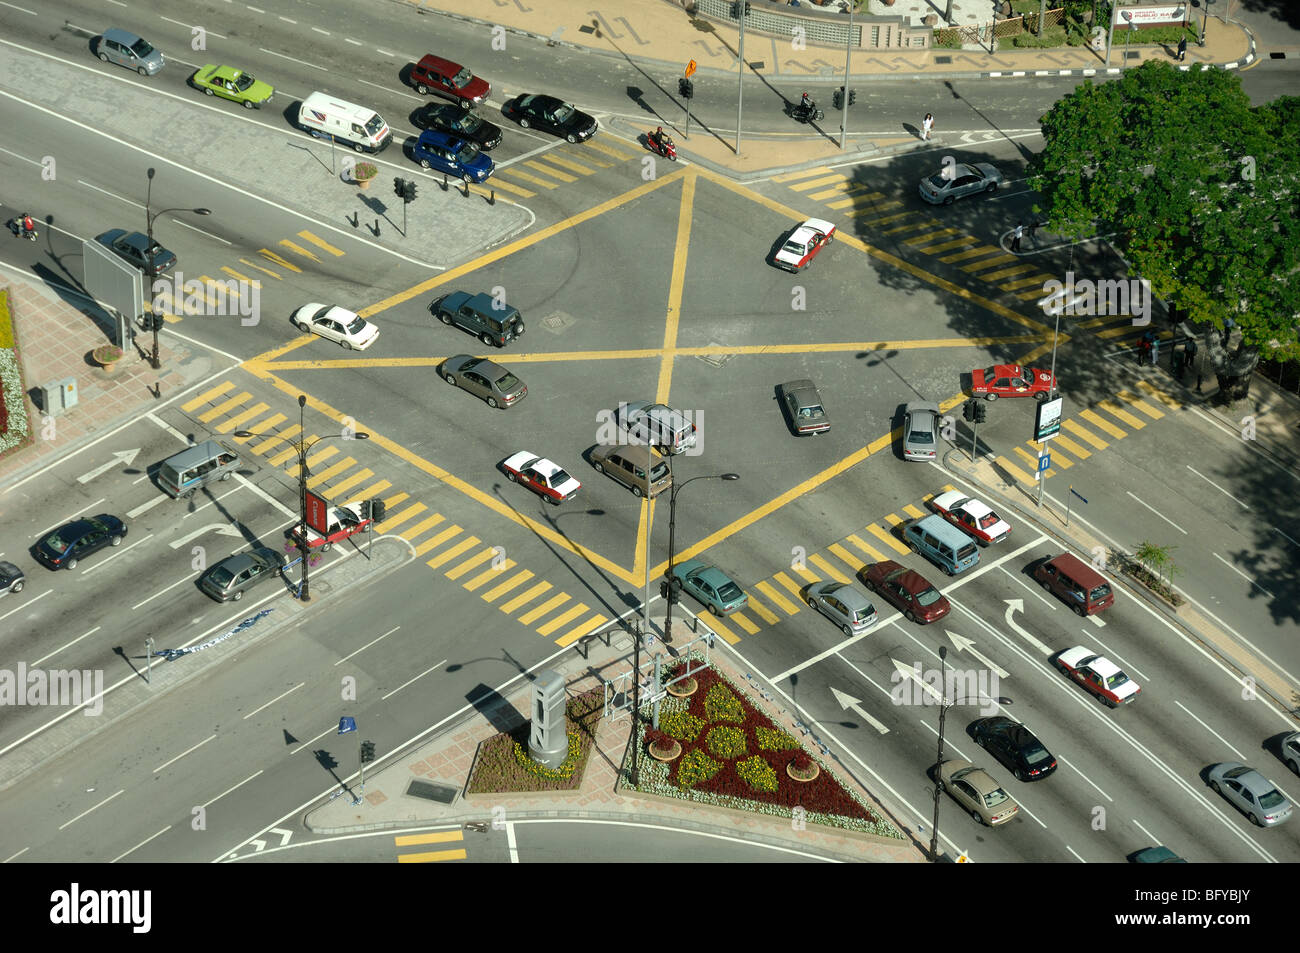 Luftaufnahme von Box Junction, Road Junction, Crossroads oder Traffic Intersection, KLCC oder Kuala Lumpur City Centre, Kuala Lumpur, Malaysia Stockfoto